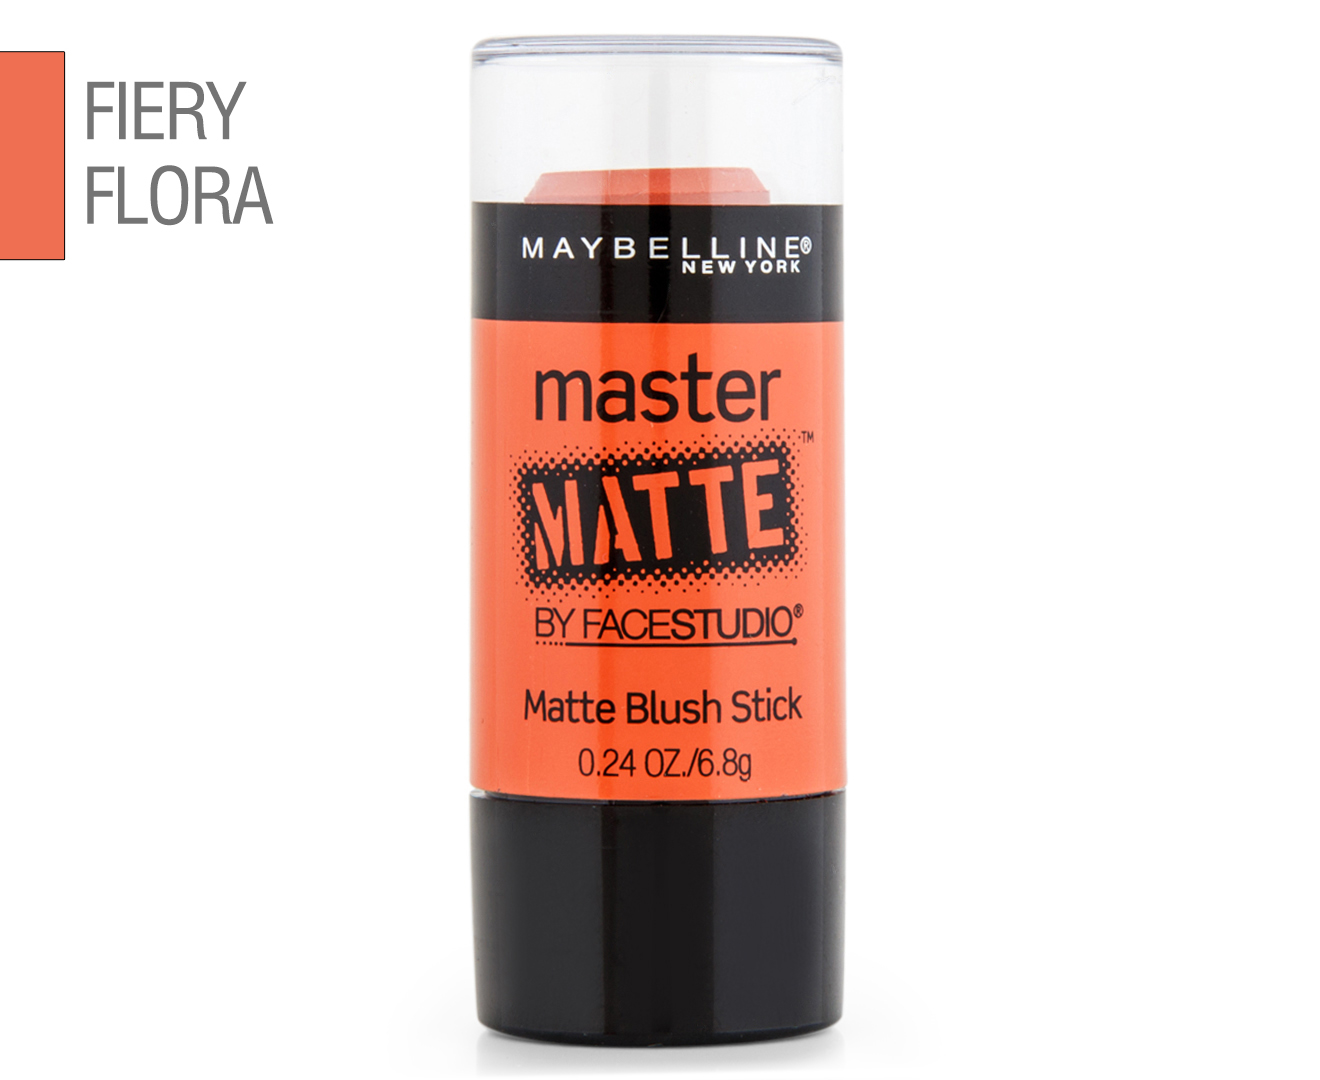 Maybelline Master Matte Blush Stick - #103 Fiery Flora